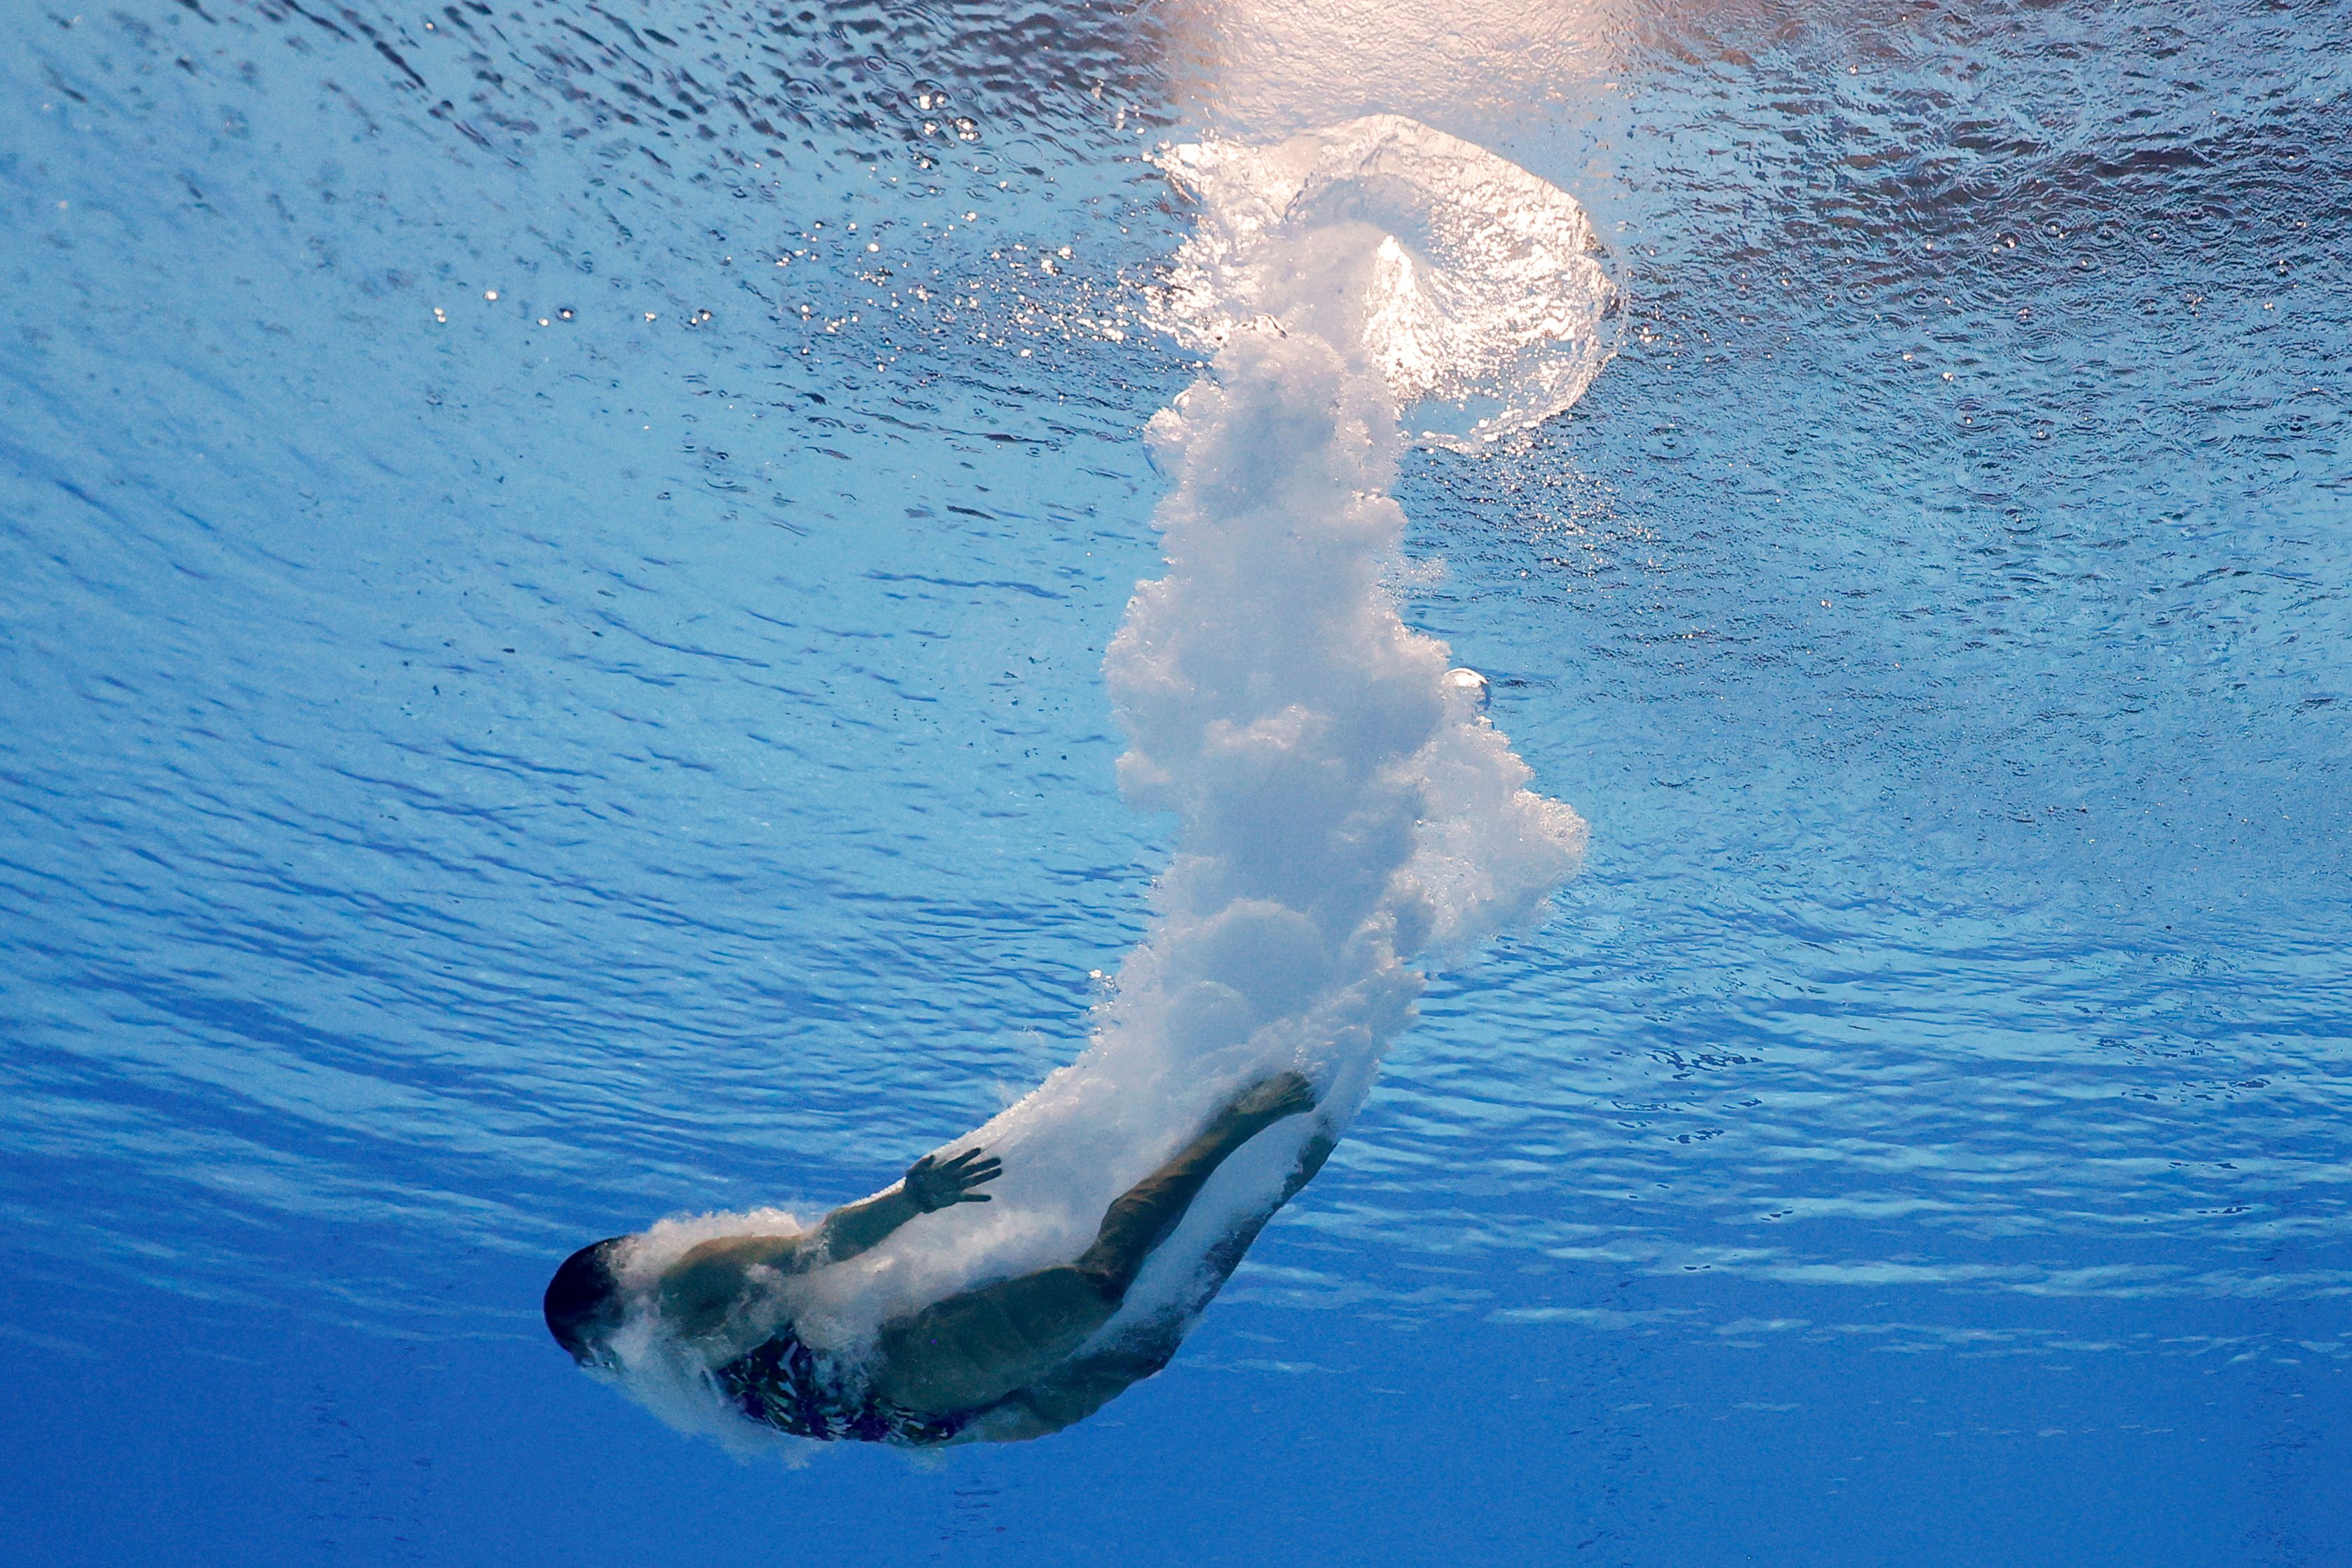 Tokyo 2020 Olympics - Diving Training